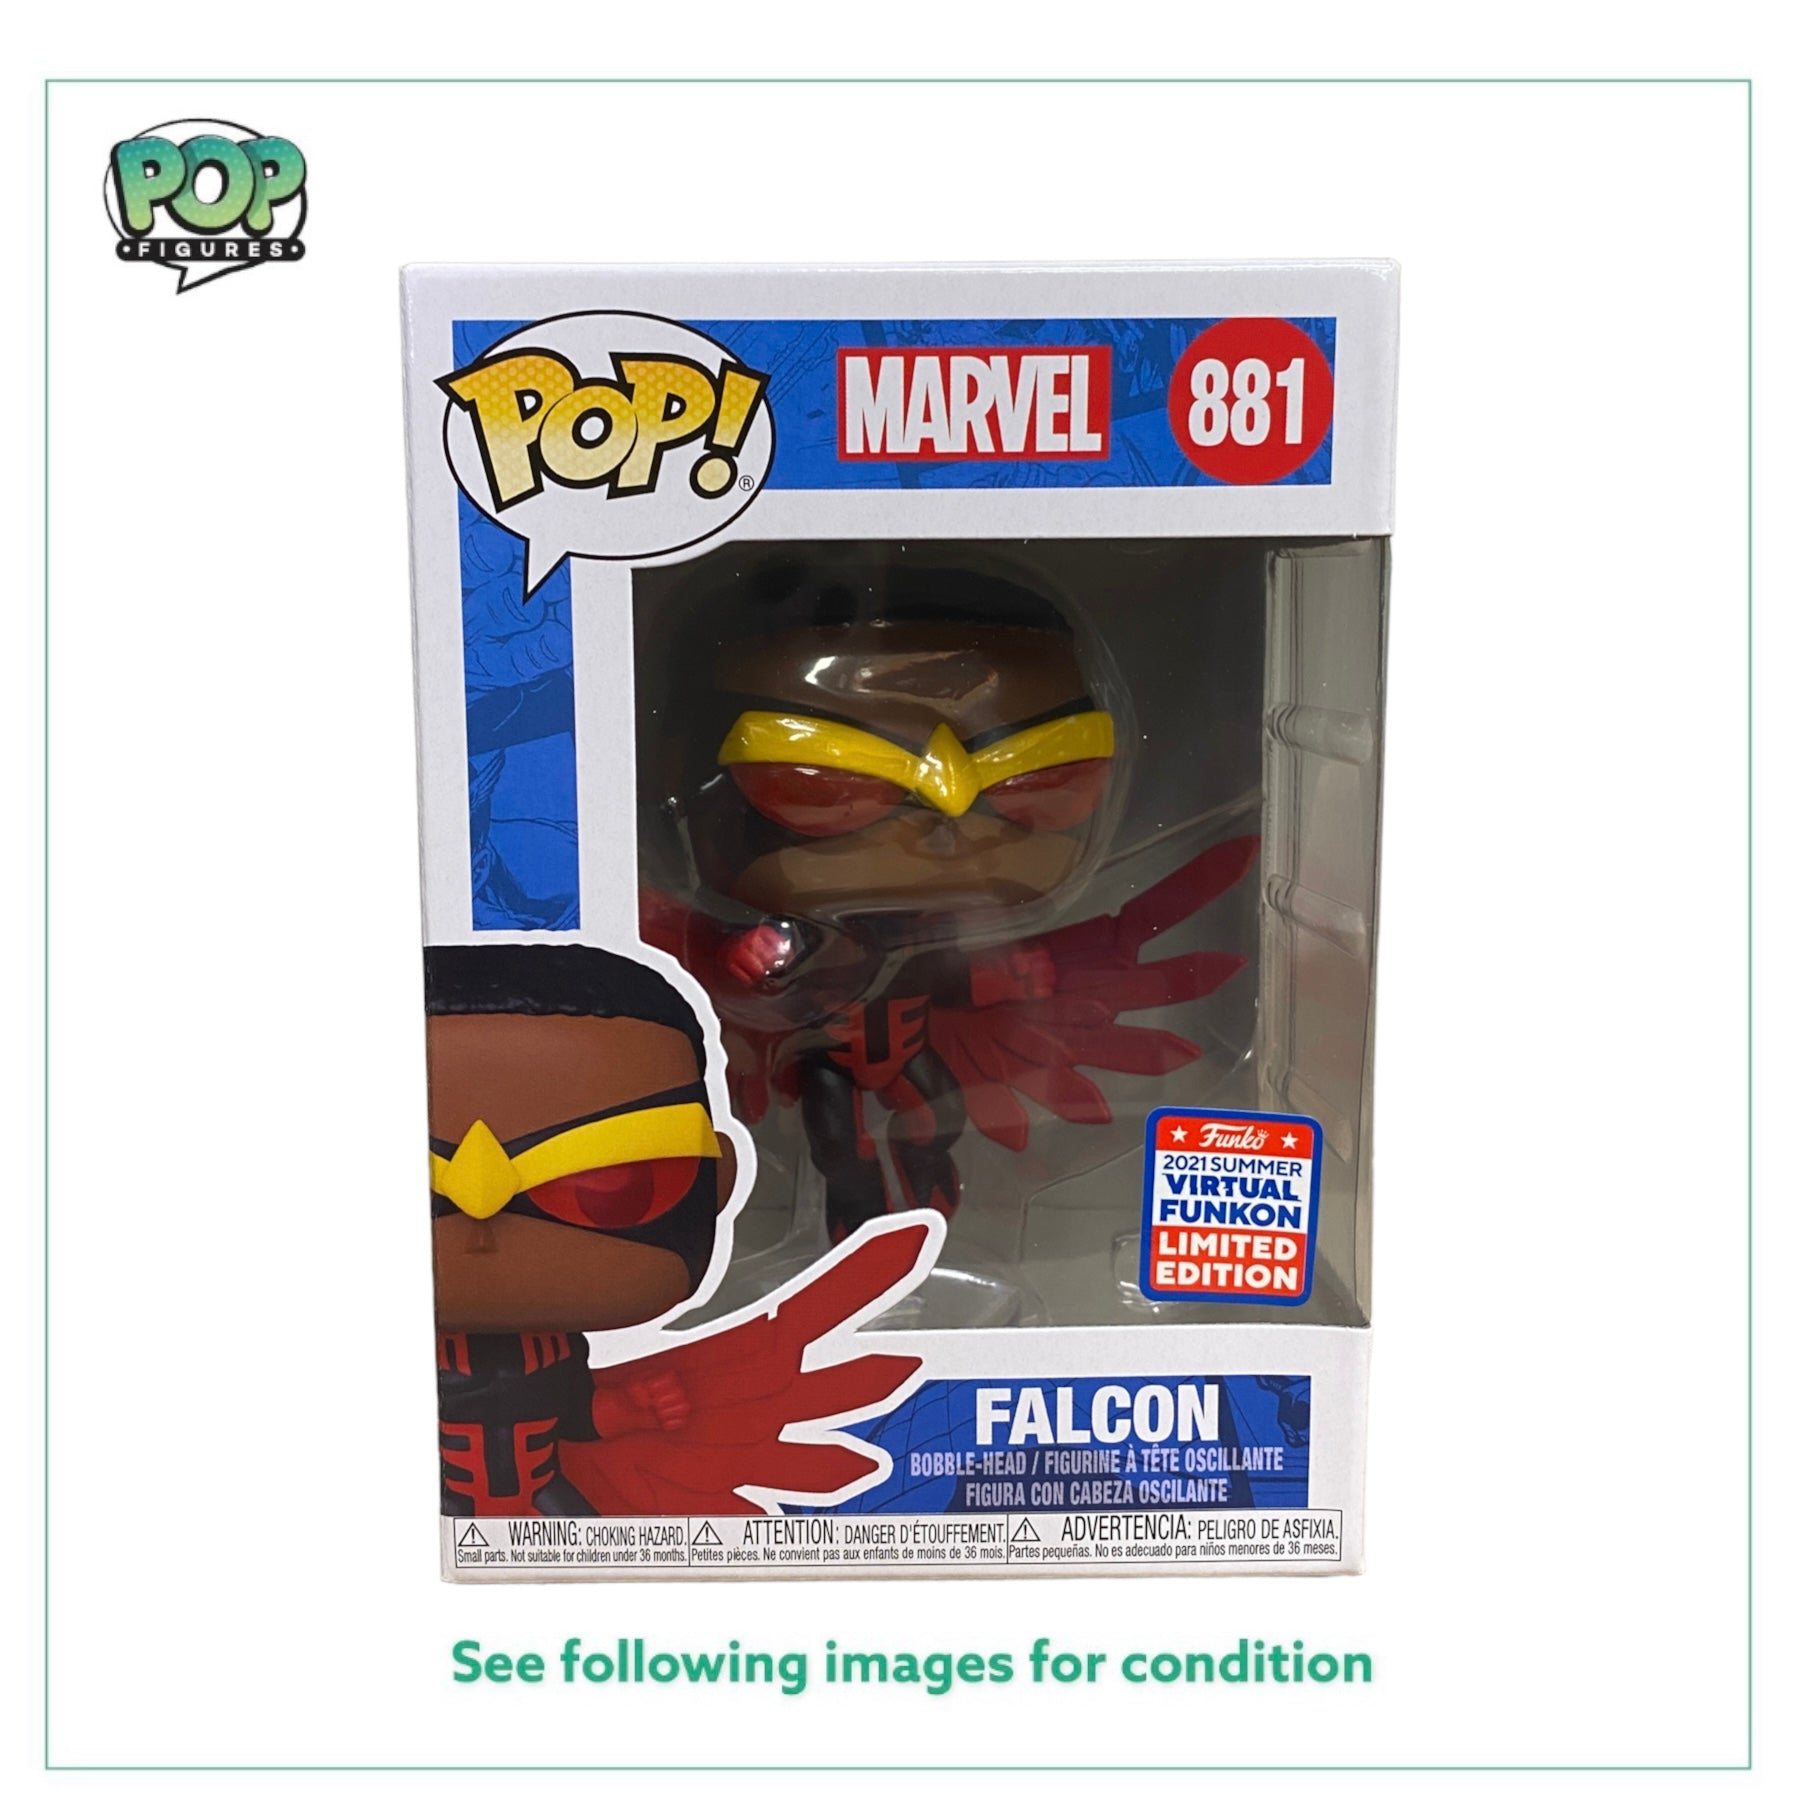 Falcon #881 (Post-Cap) Funko Pop! - Marvel - Virtual Funkon 2021 Official Convention Exclusive - Condition 9/10